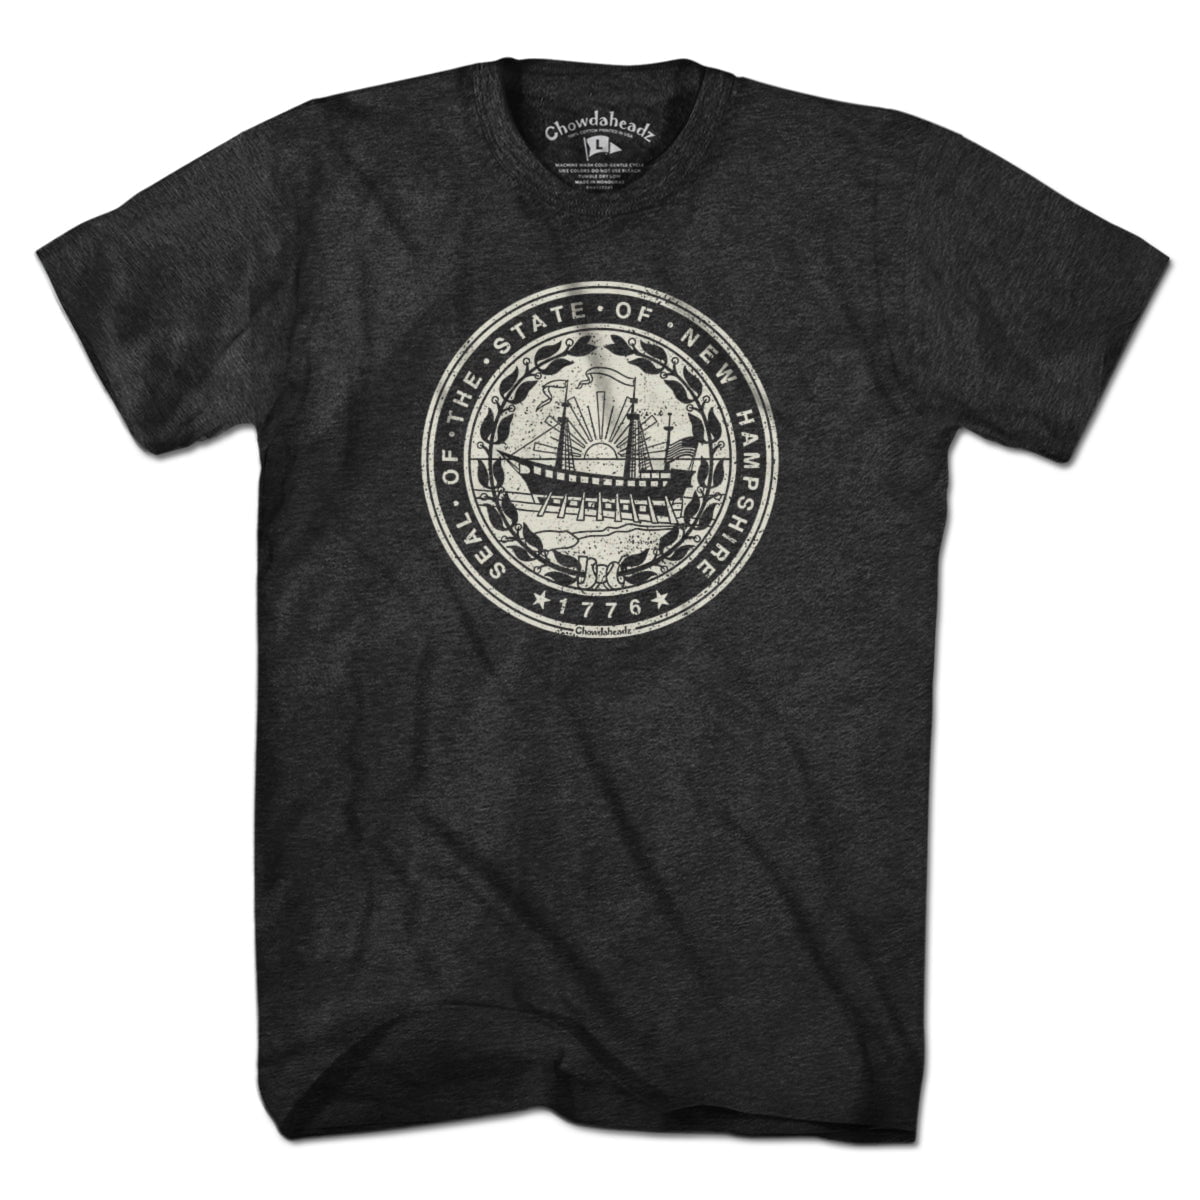 New Hampshire State Seal T-Shirt - Chowdaheadz